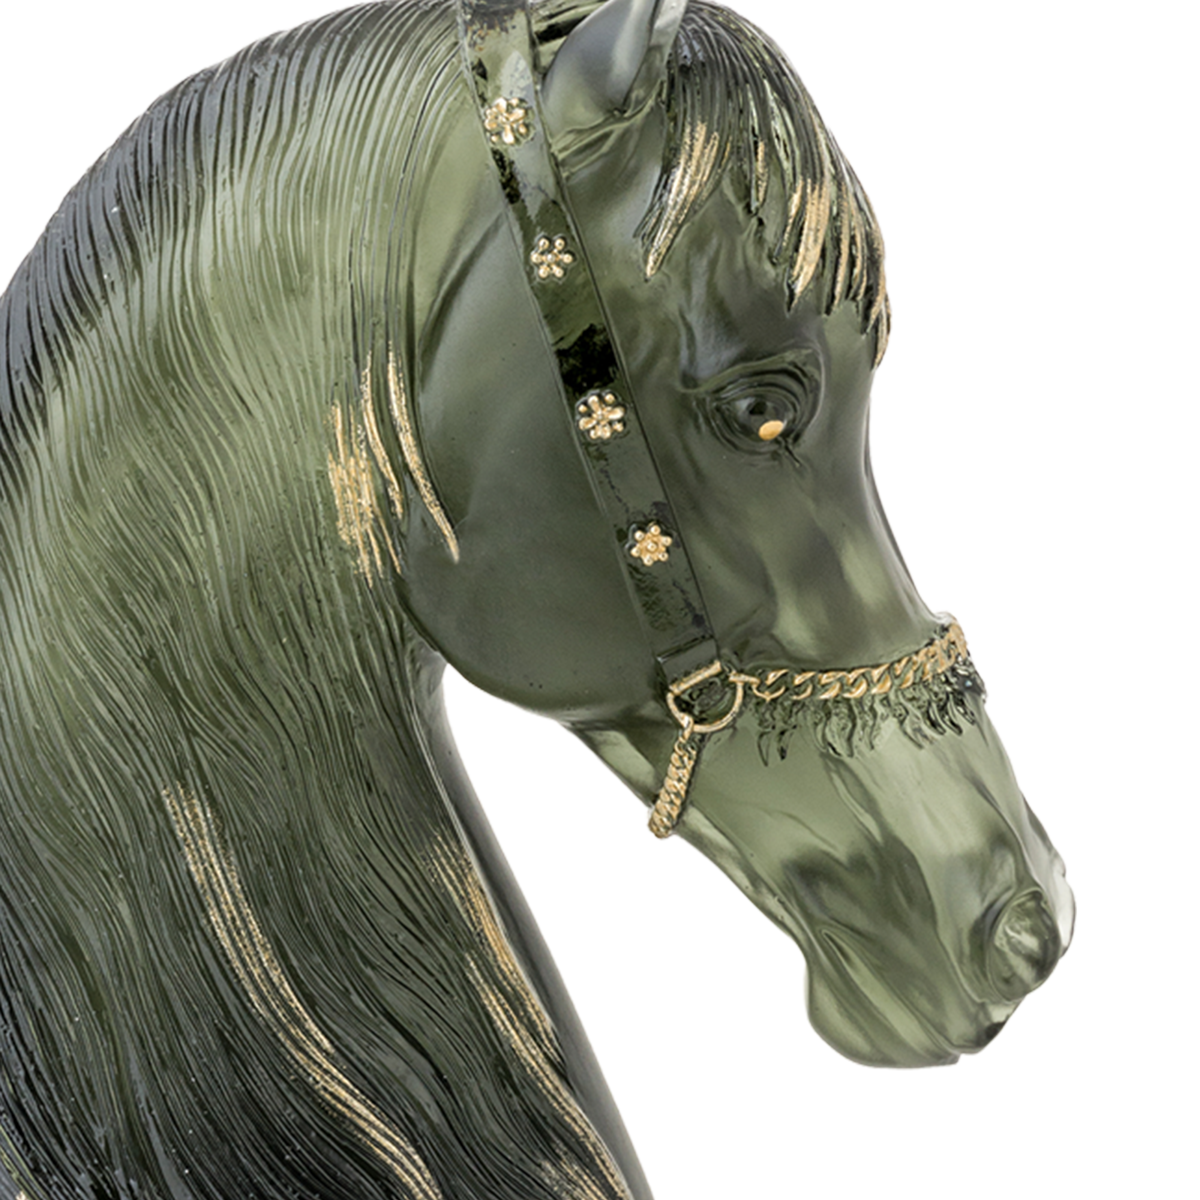 Stallion Horse Sculpture